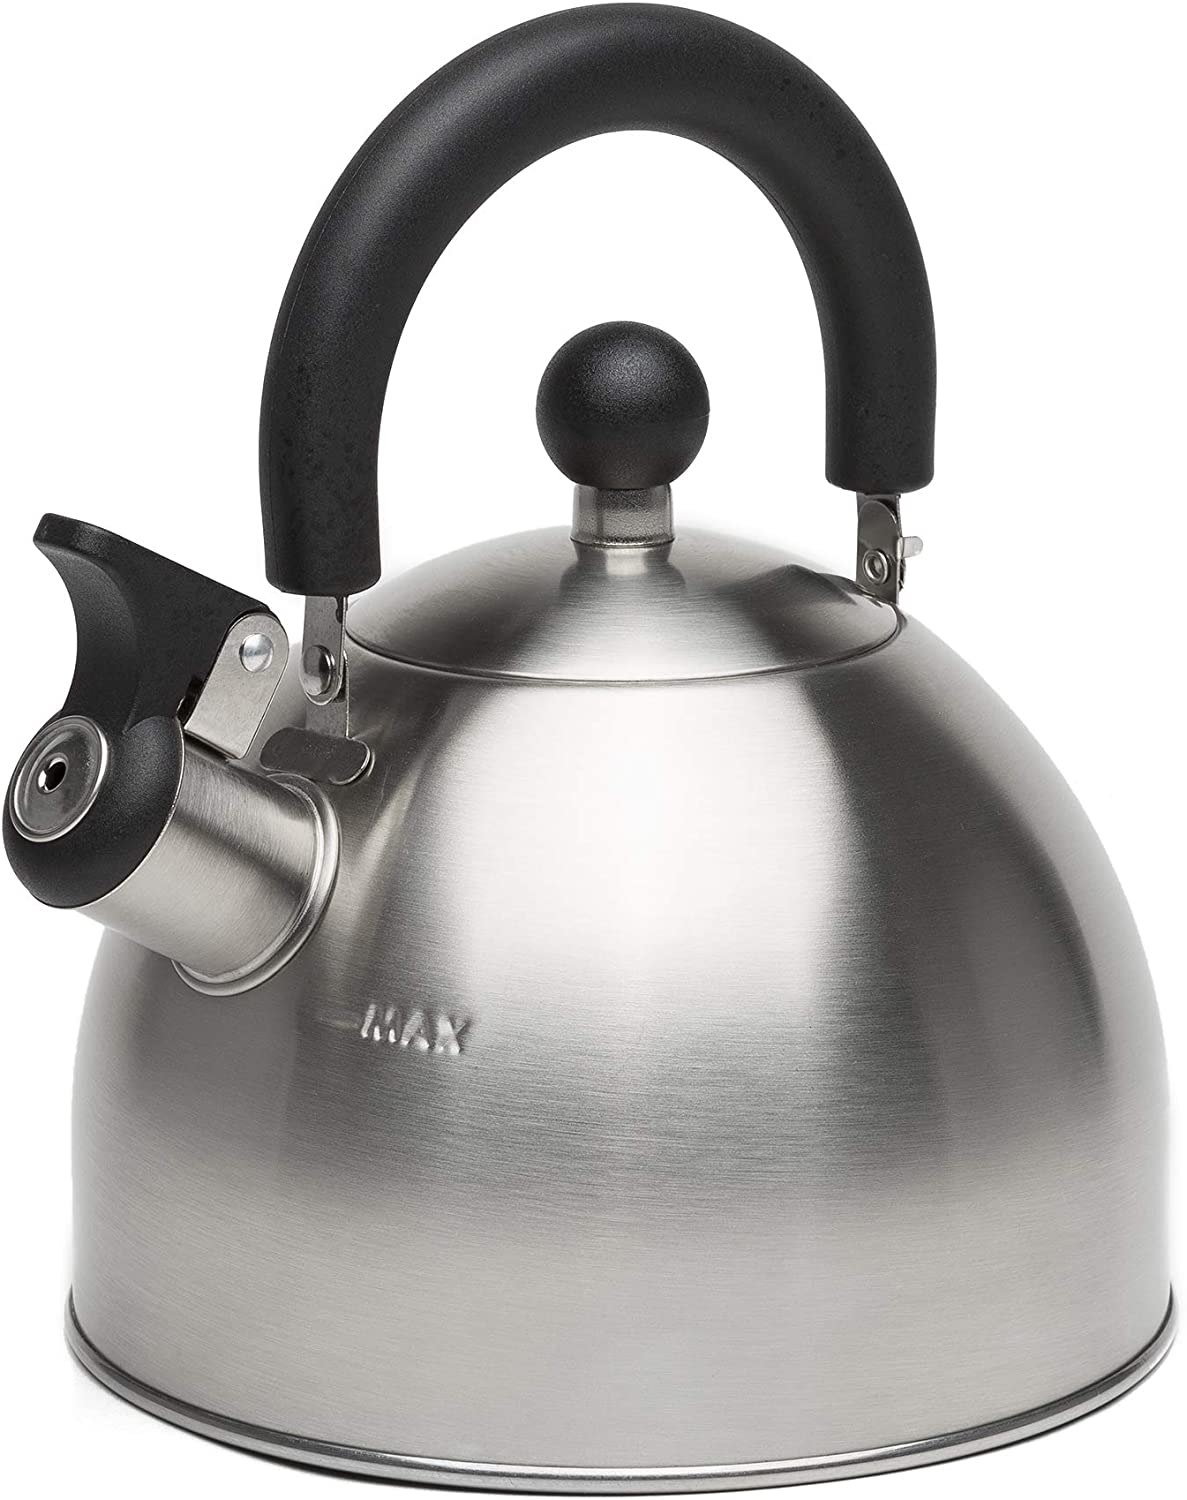 https://www.dontwasteyourmoney.com/wp-content/uploads/2022/10/primula-classic-stay-cool-handle-tea-pot-kettle-1-5-quart-tea-pot-kettle.jpg